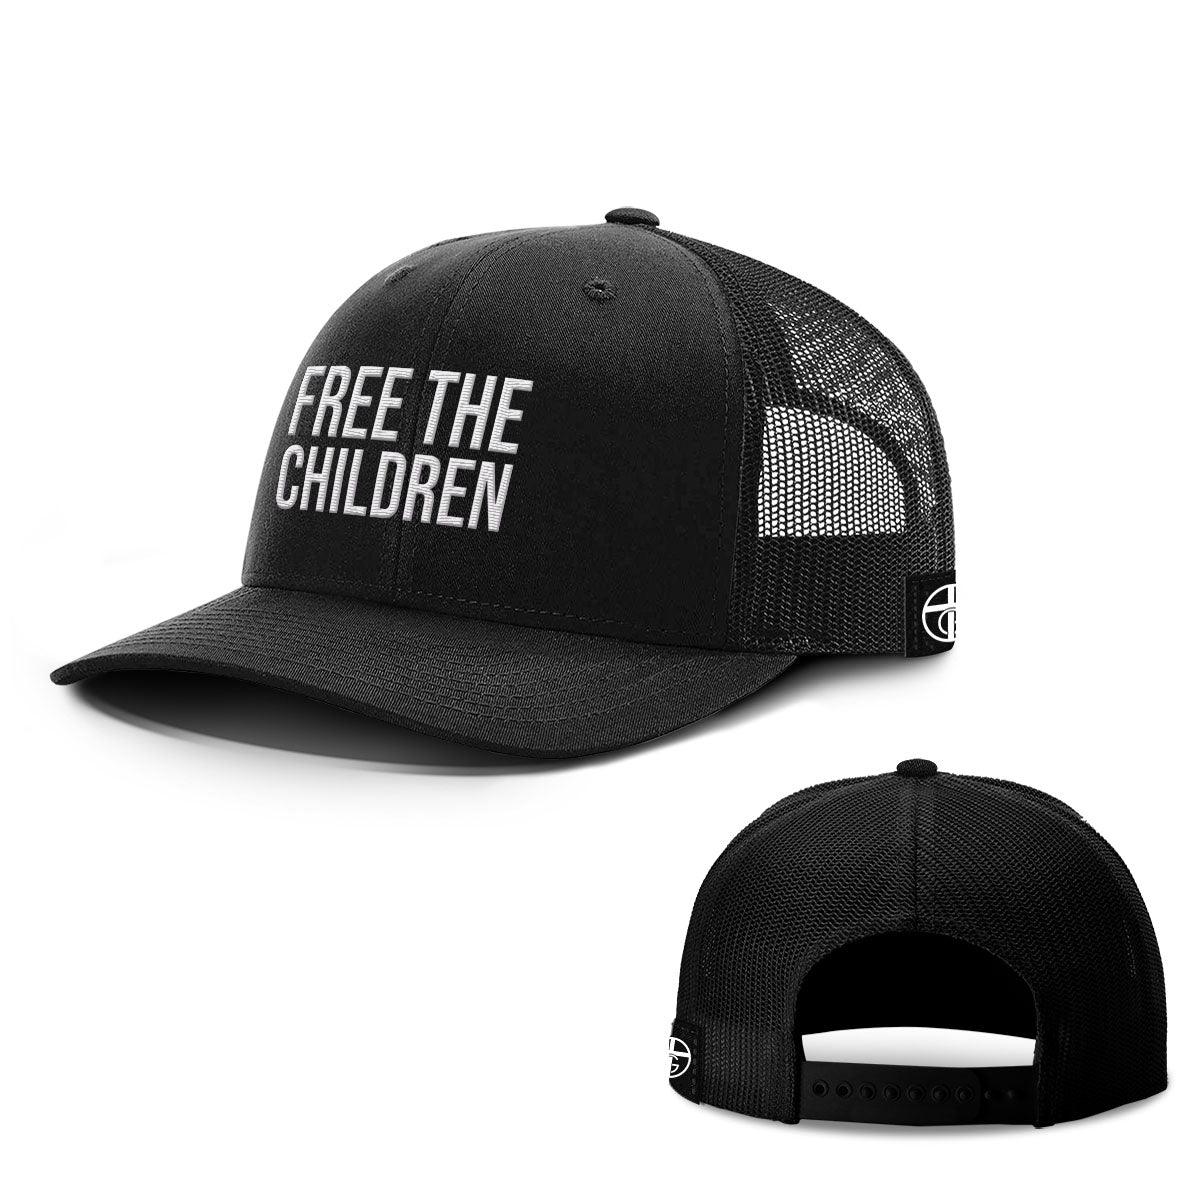 Free The Children Hats